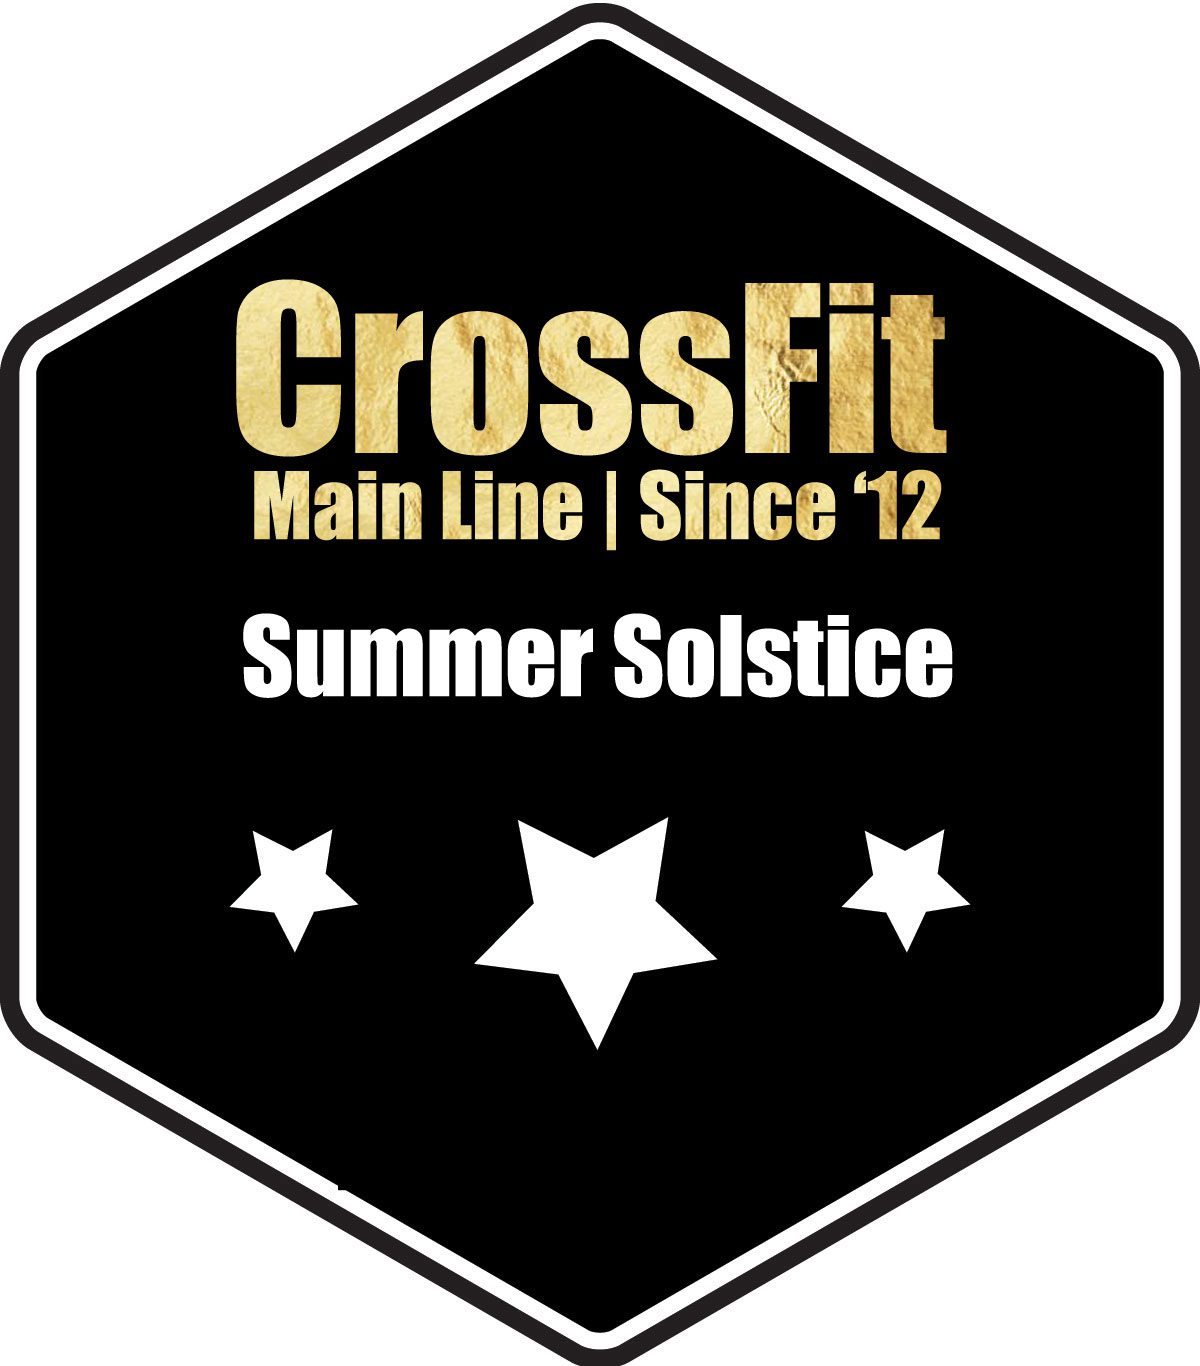 Friday 7.12.19 CrossFit – CrossFit Main Line